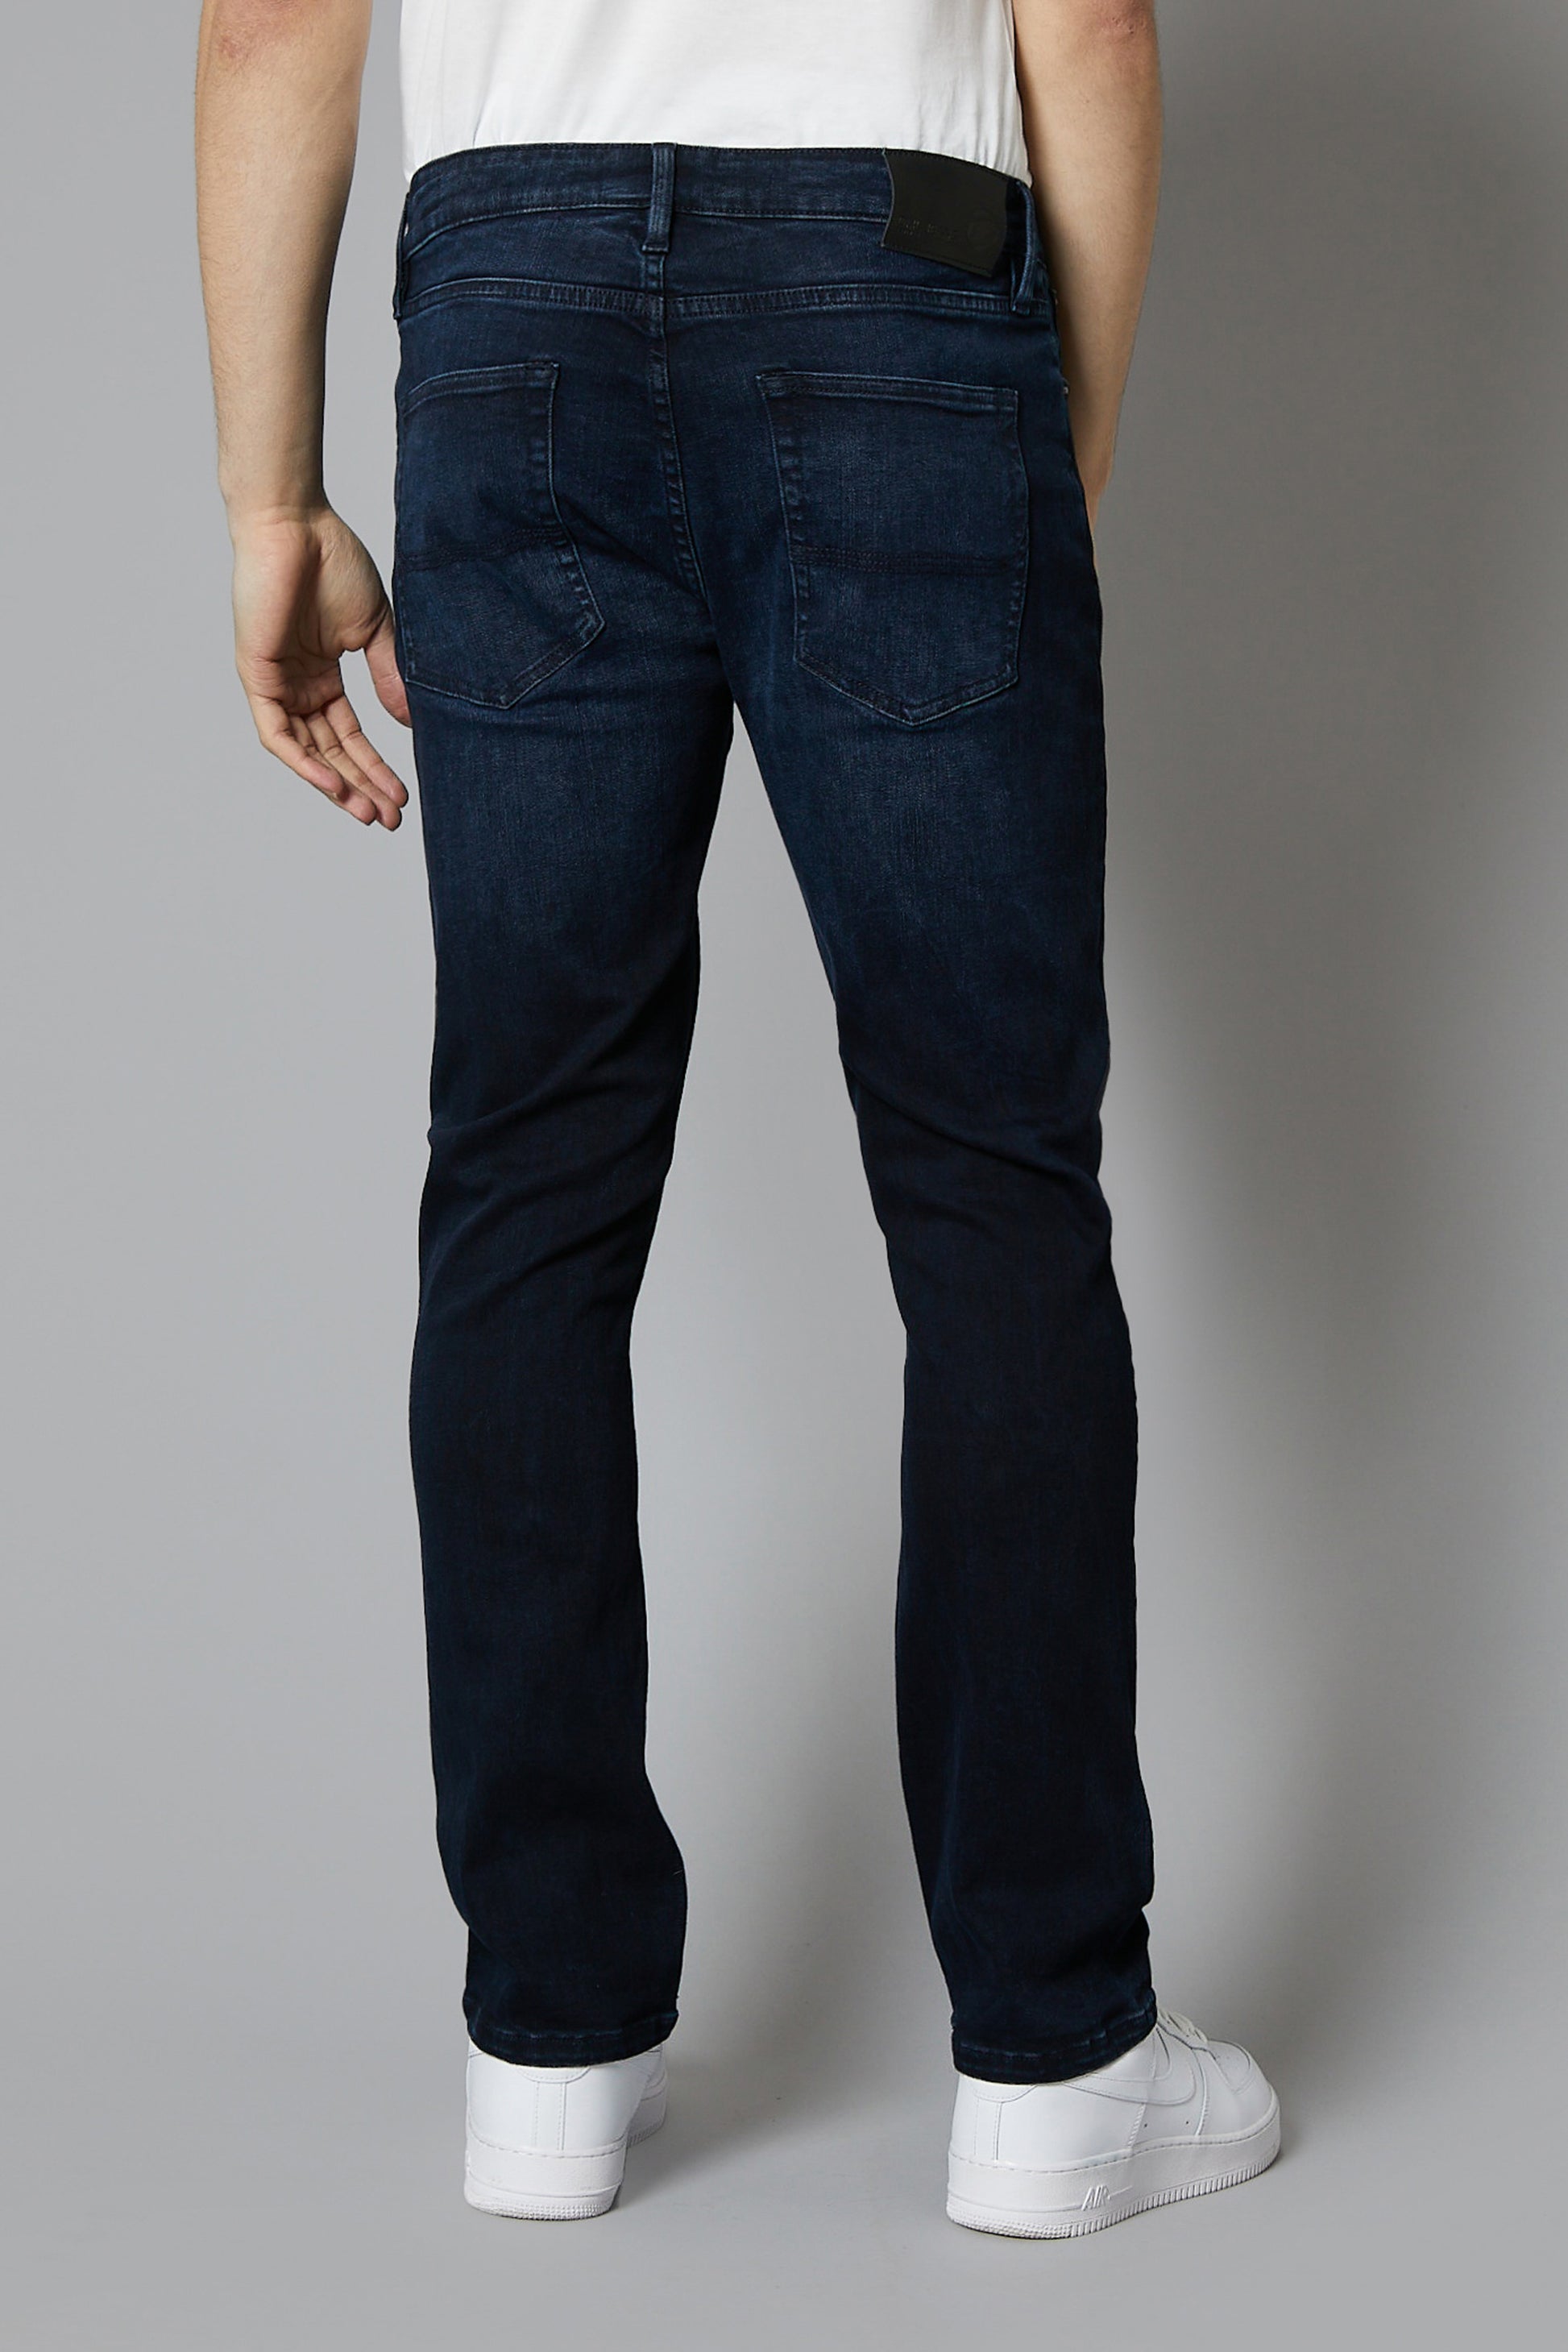 DML Jeans Alaska mens Ink Blue straight leg denim jeans back view